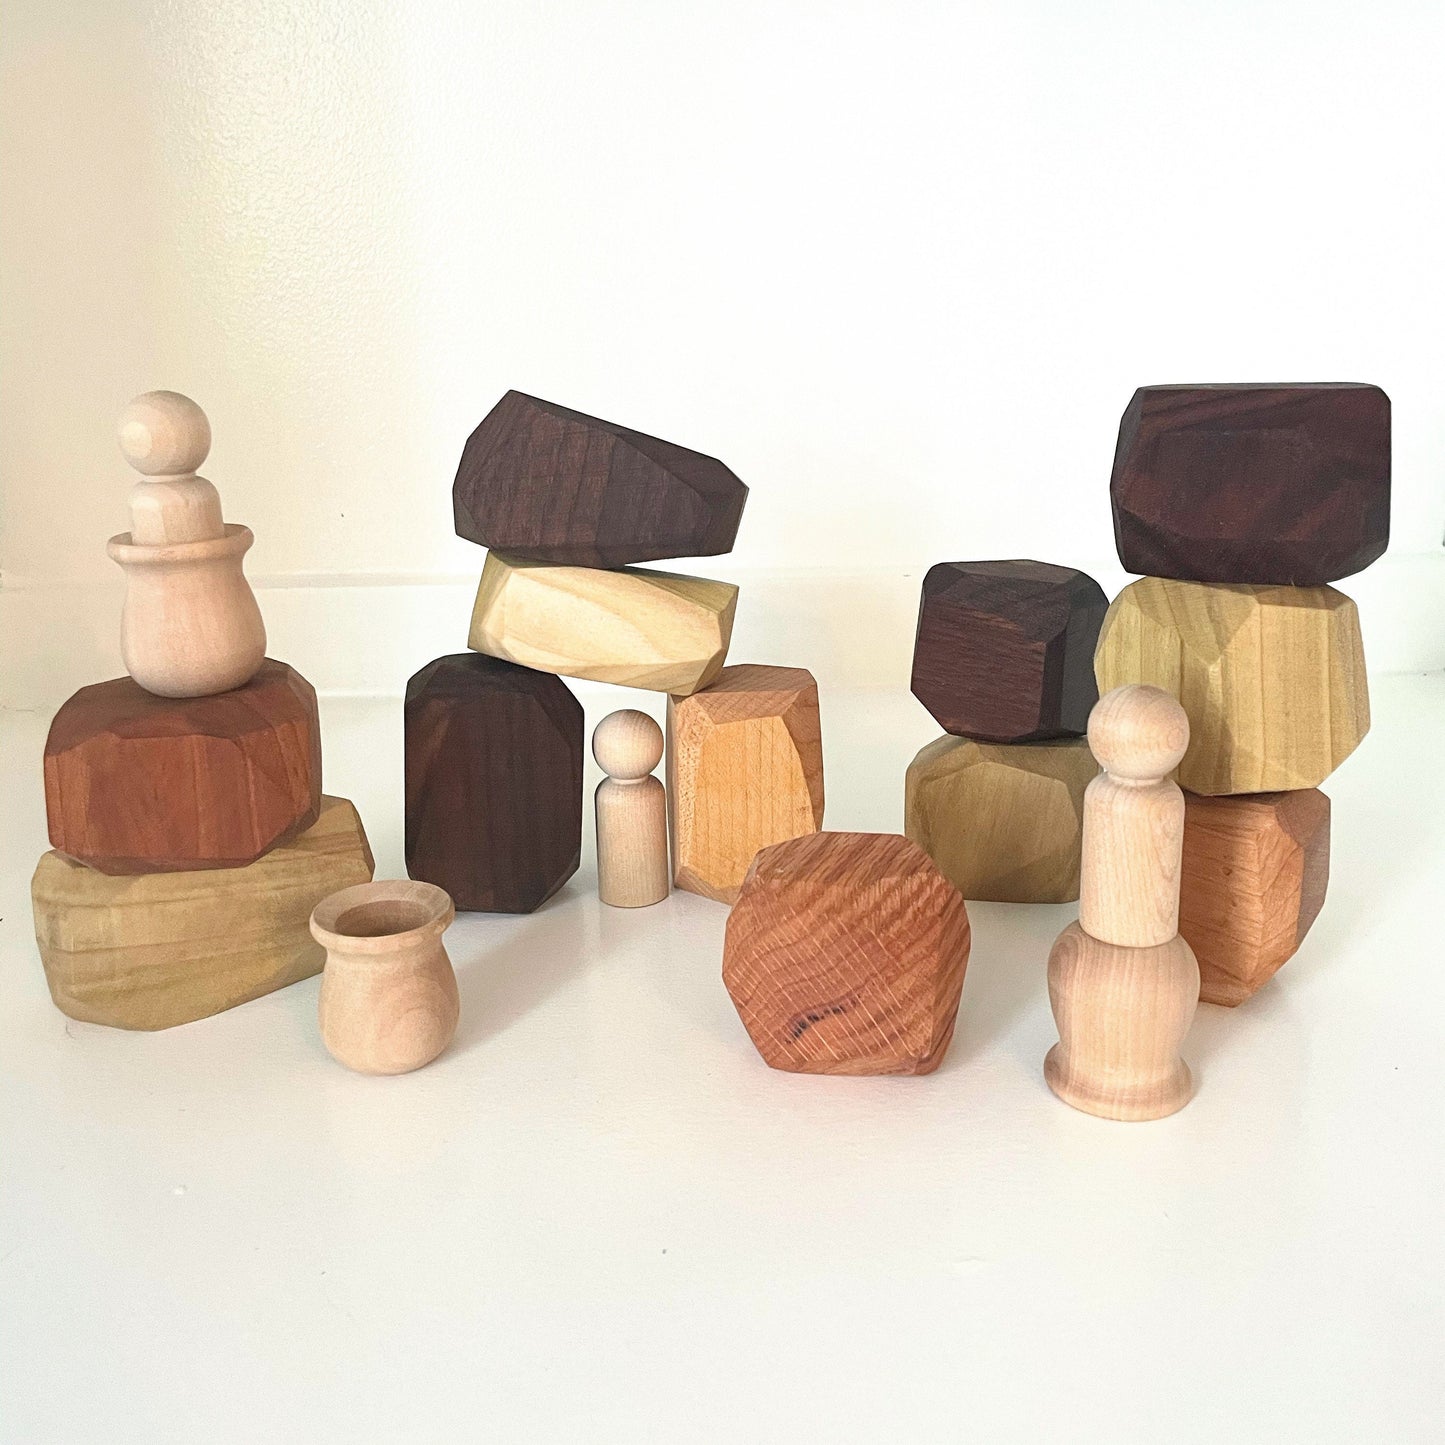 Mixed Wood stacking stones set